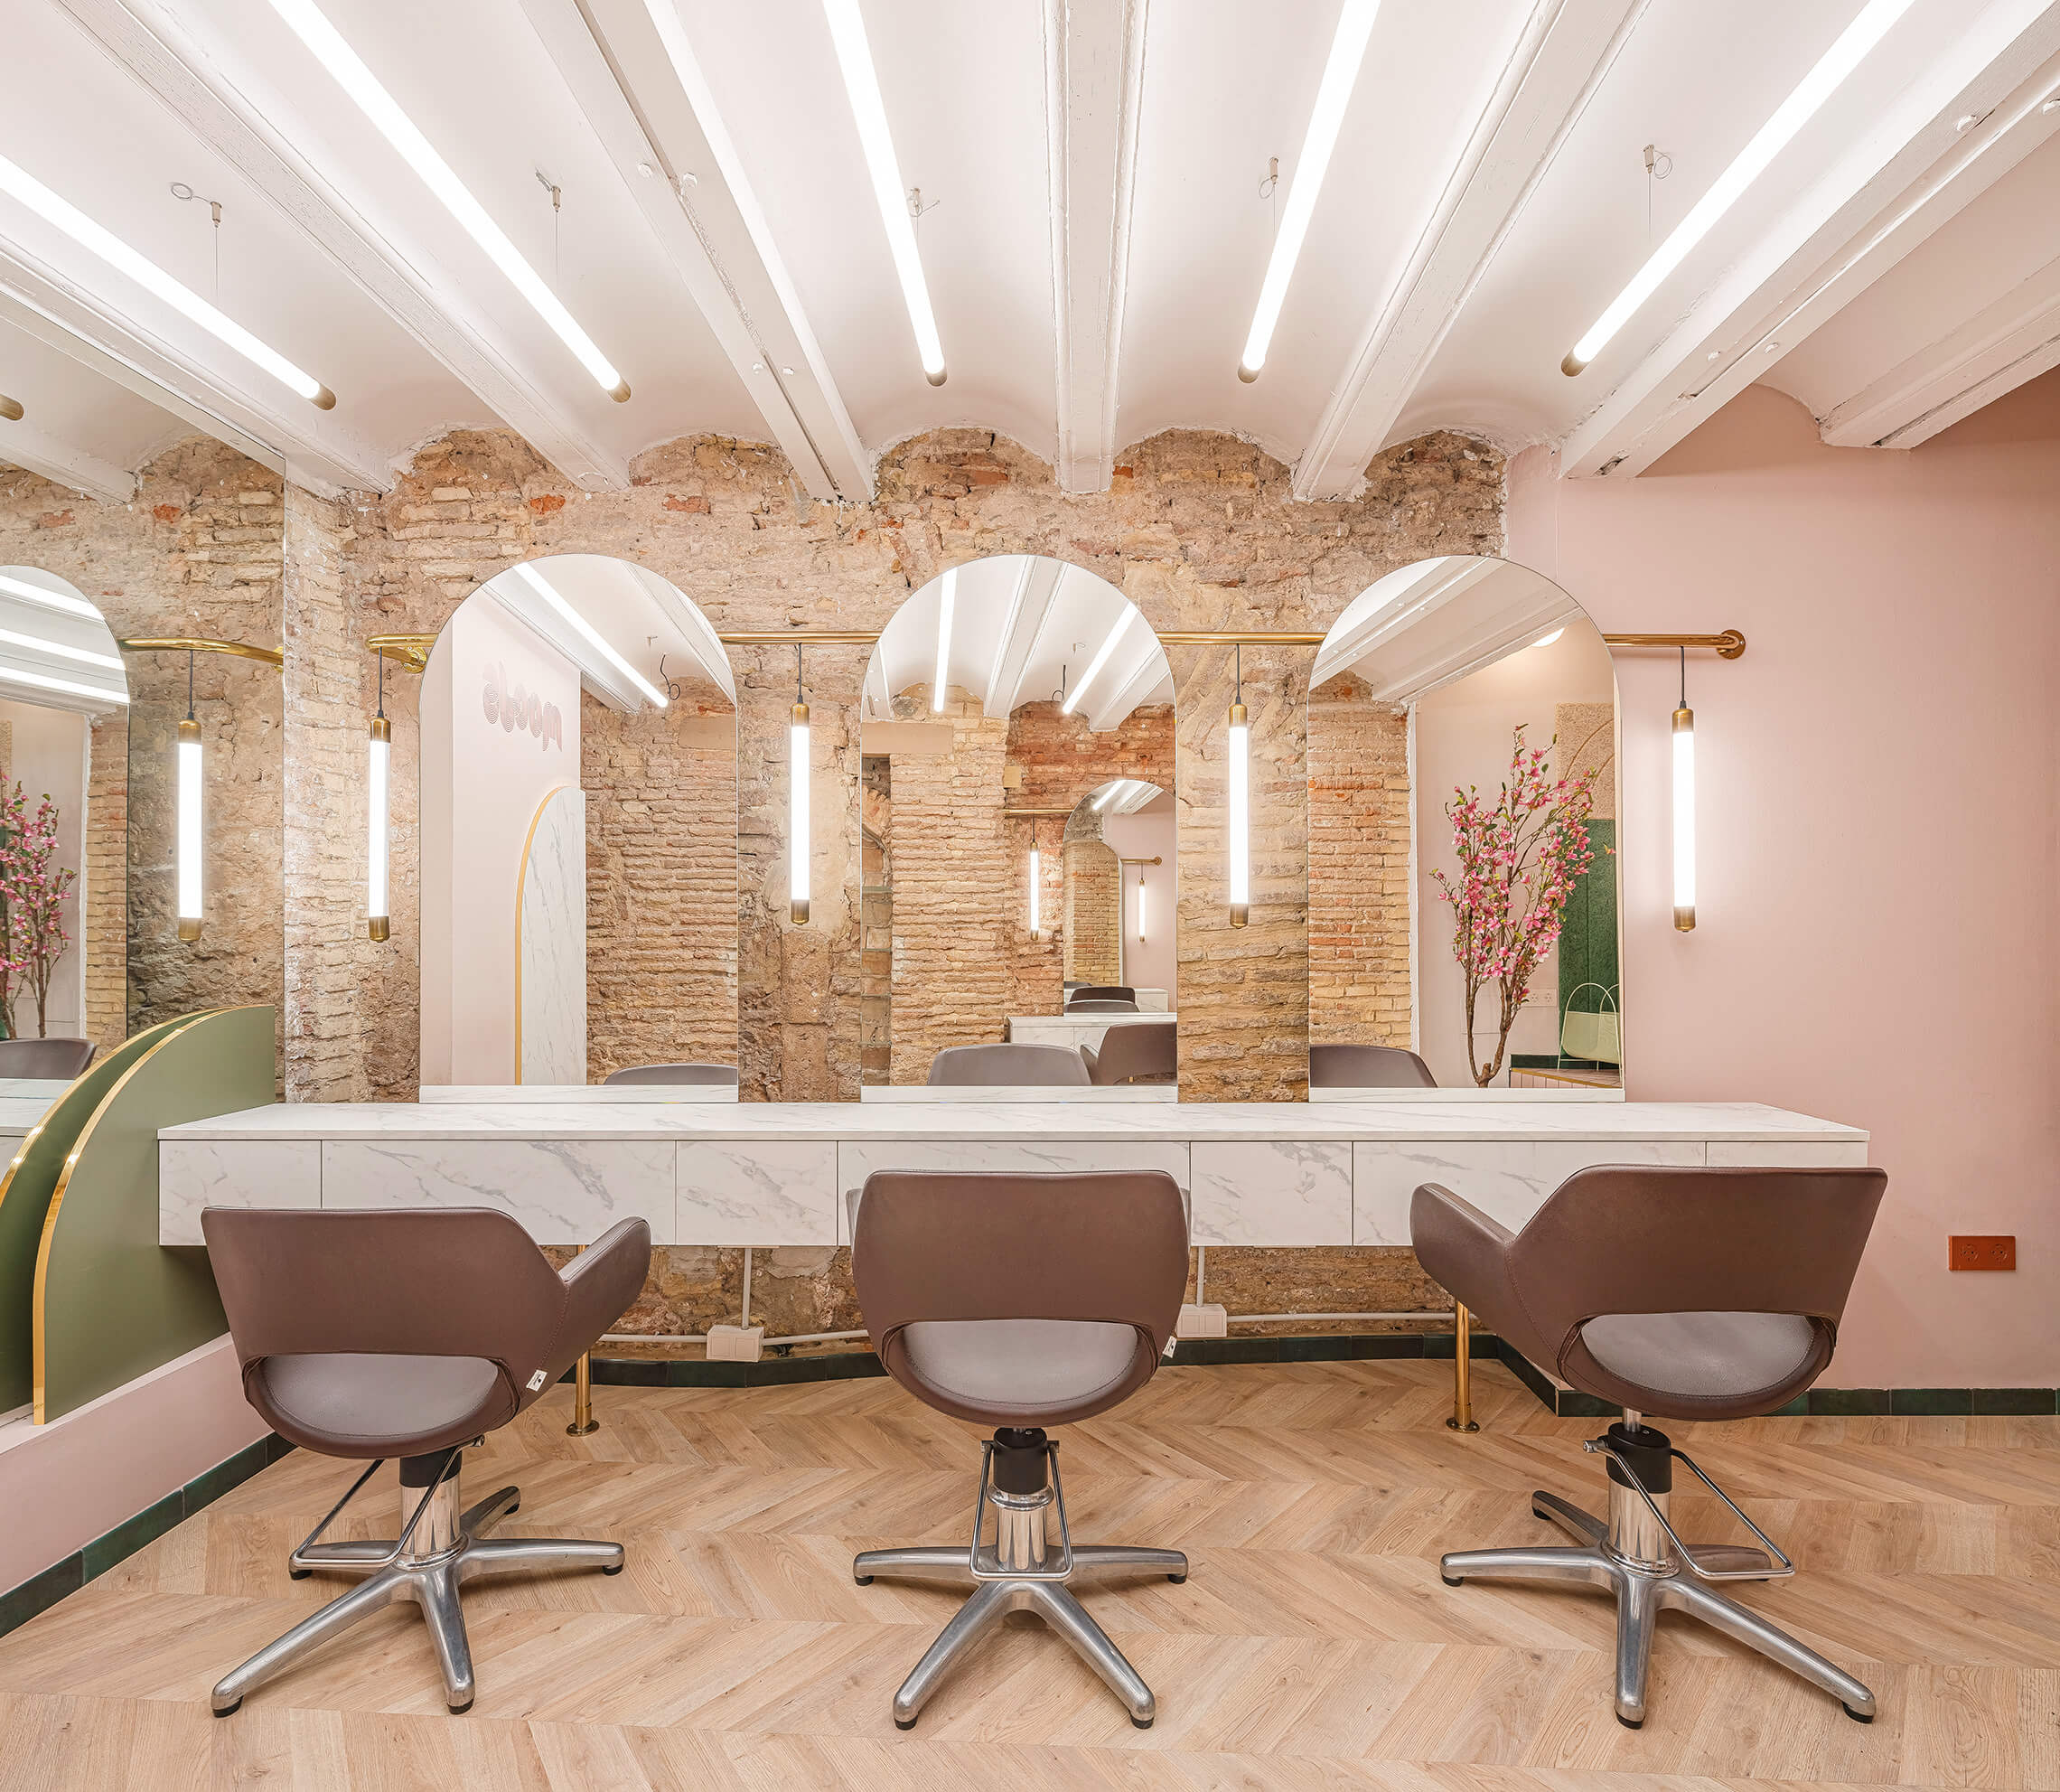 Proyecto de interiorismo del salón de peluquería Moods de Valencia.